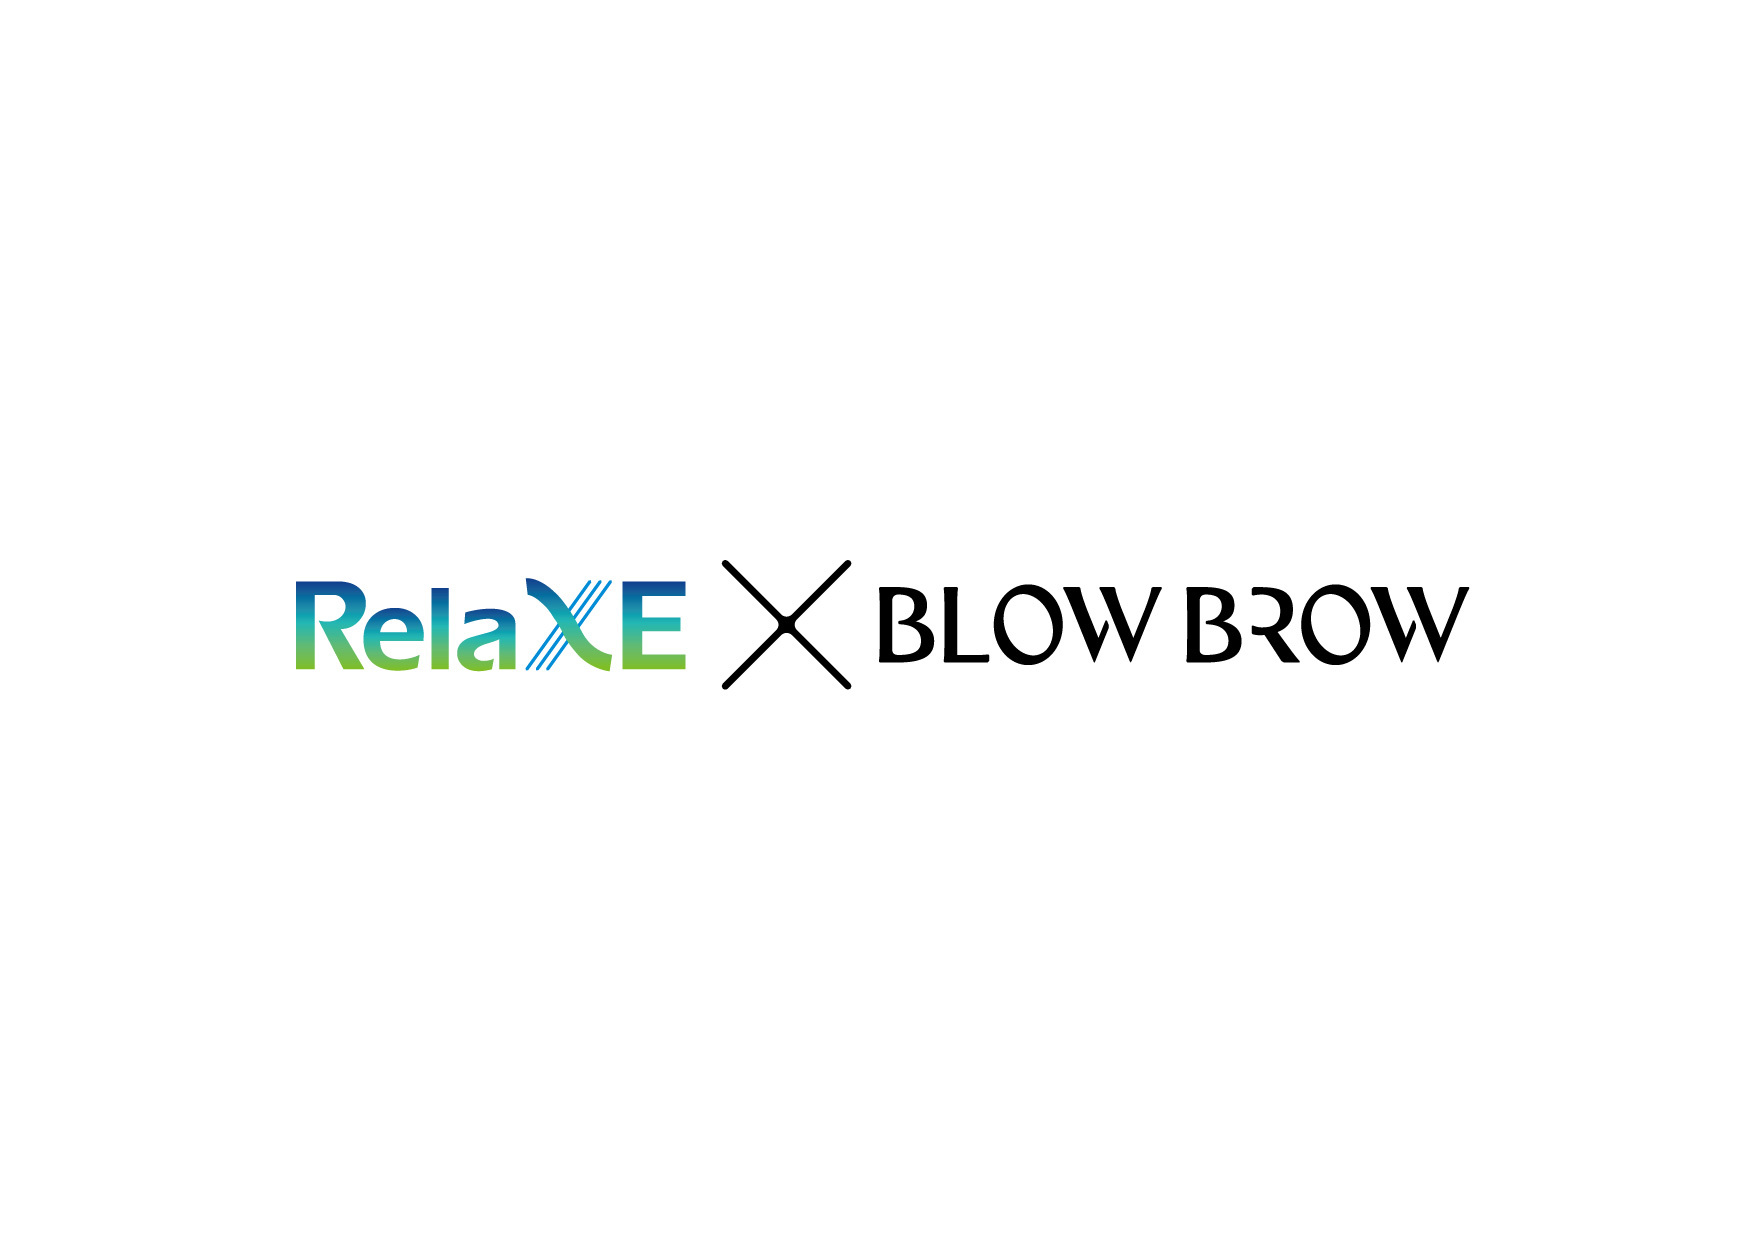 JR東日本スポーツとアトリエはるか 初のコラボ店舗
『RelaXE × BLOW BROW』
JR東京駅グランスタ八重北に8月8日(木)オープン！